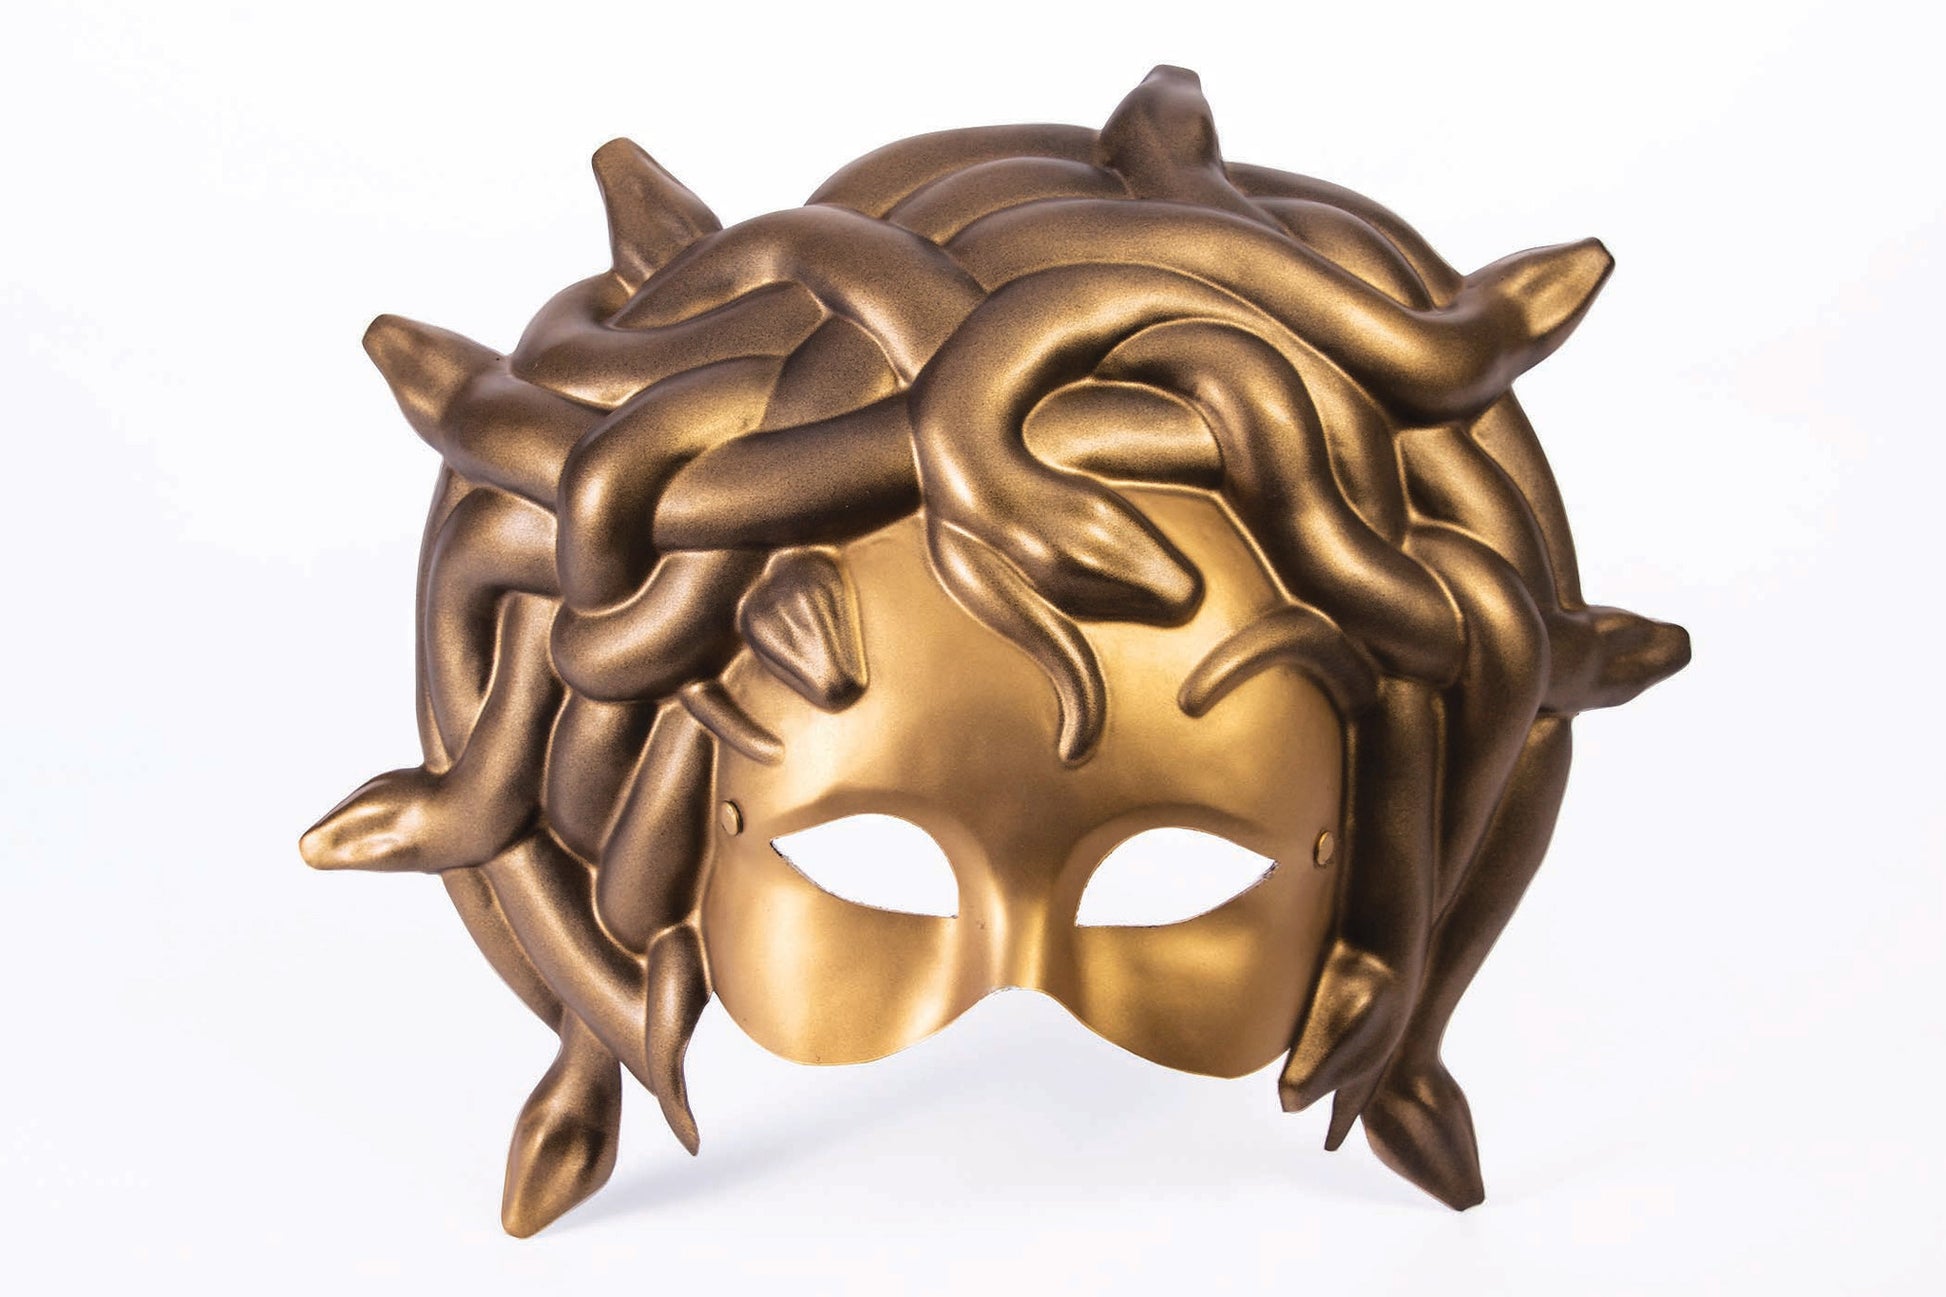 A gold Medusa themed masquerade mask.